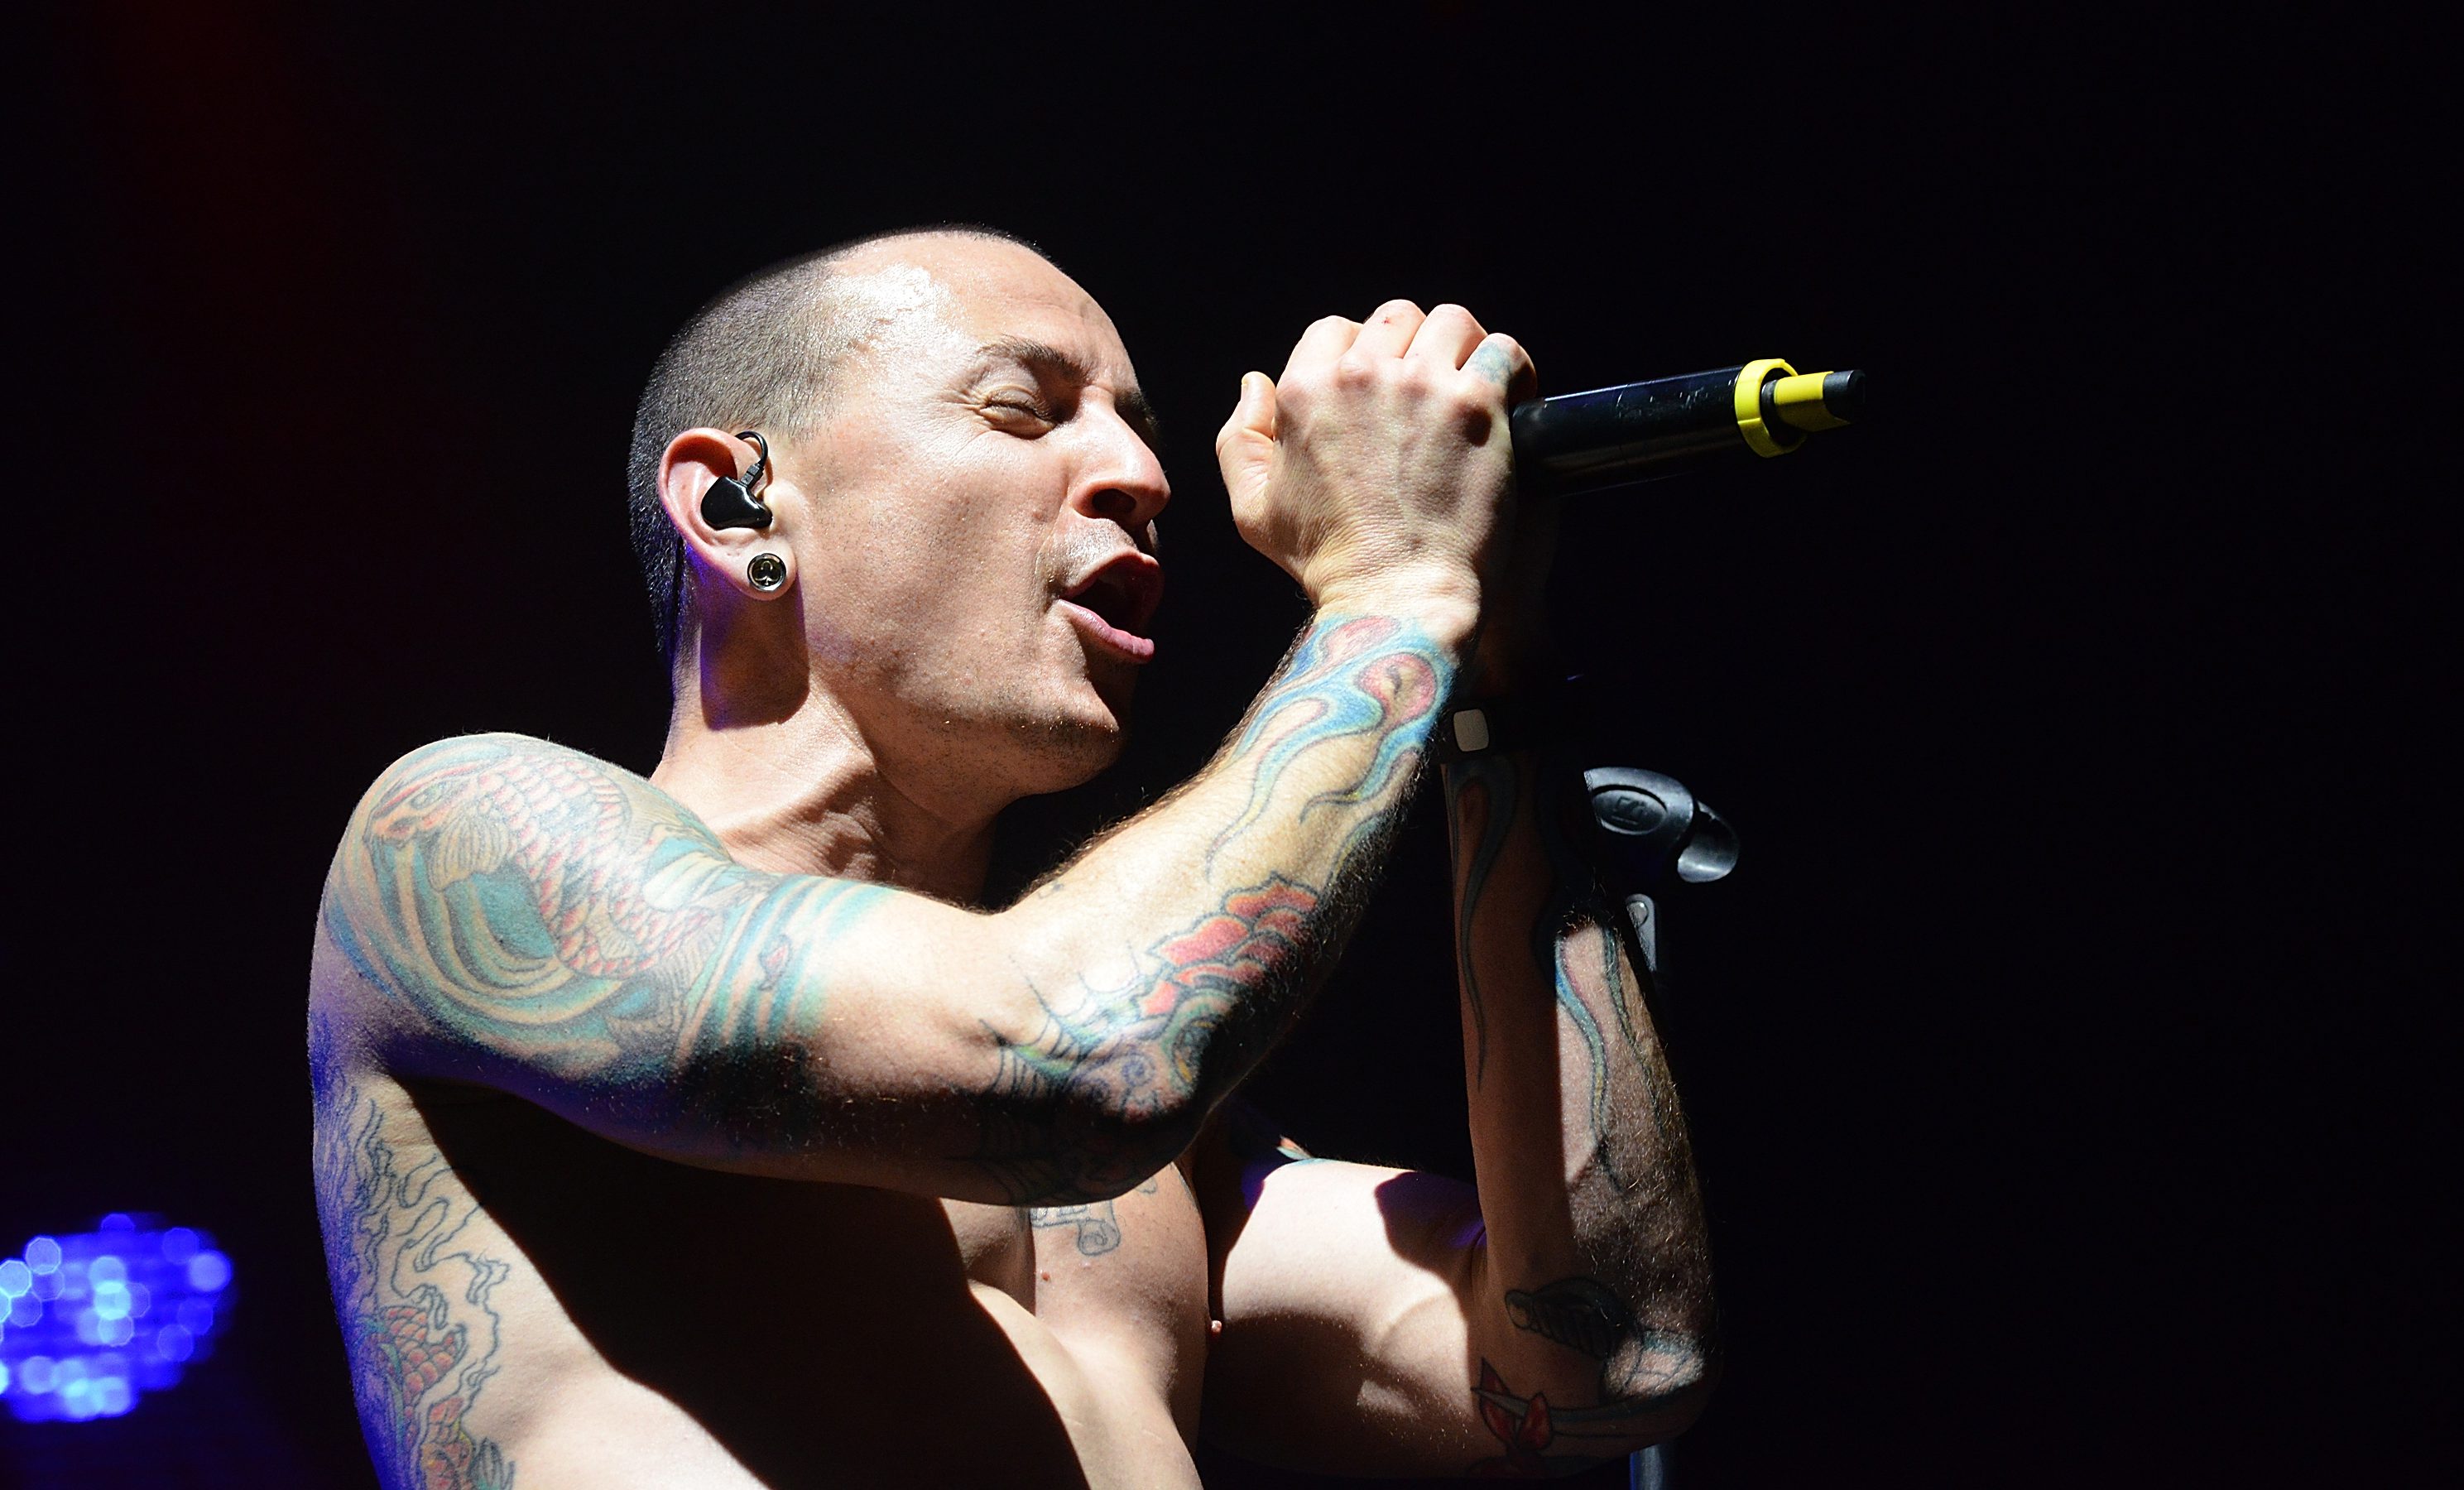 Read Linkin Park Releases Letter To Chester Bennington